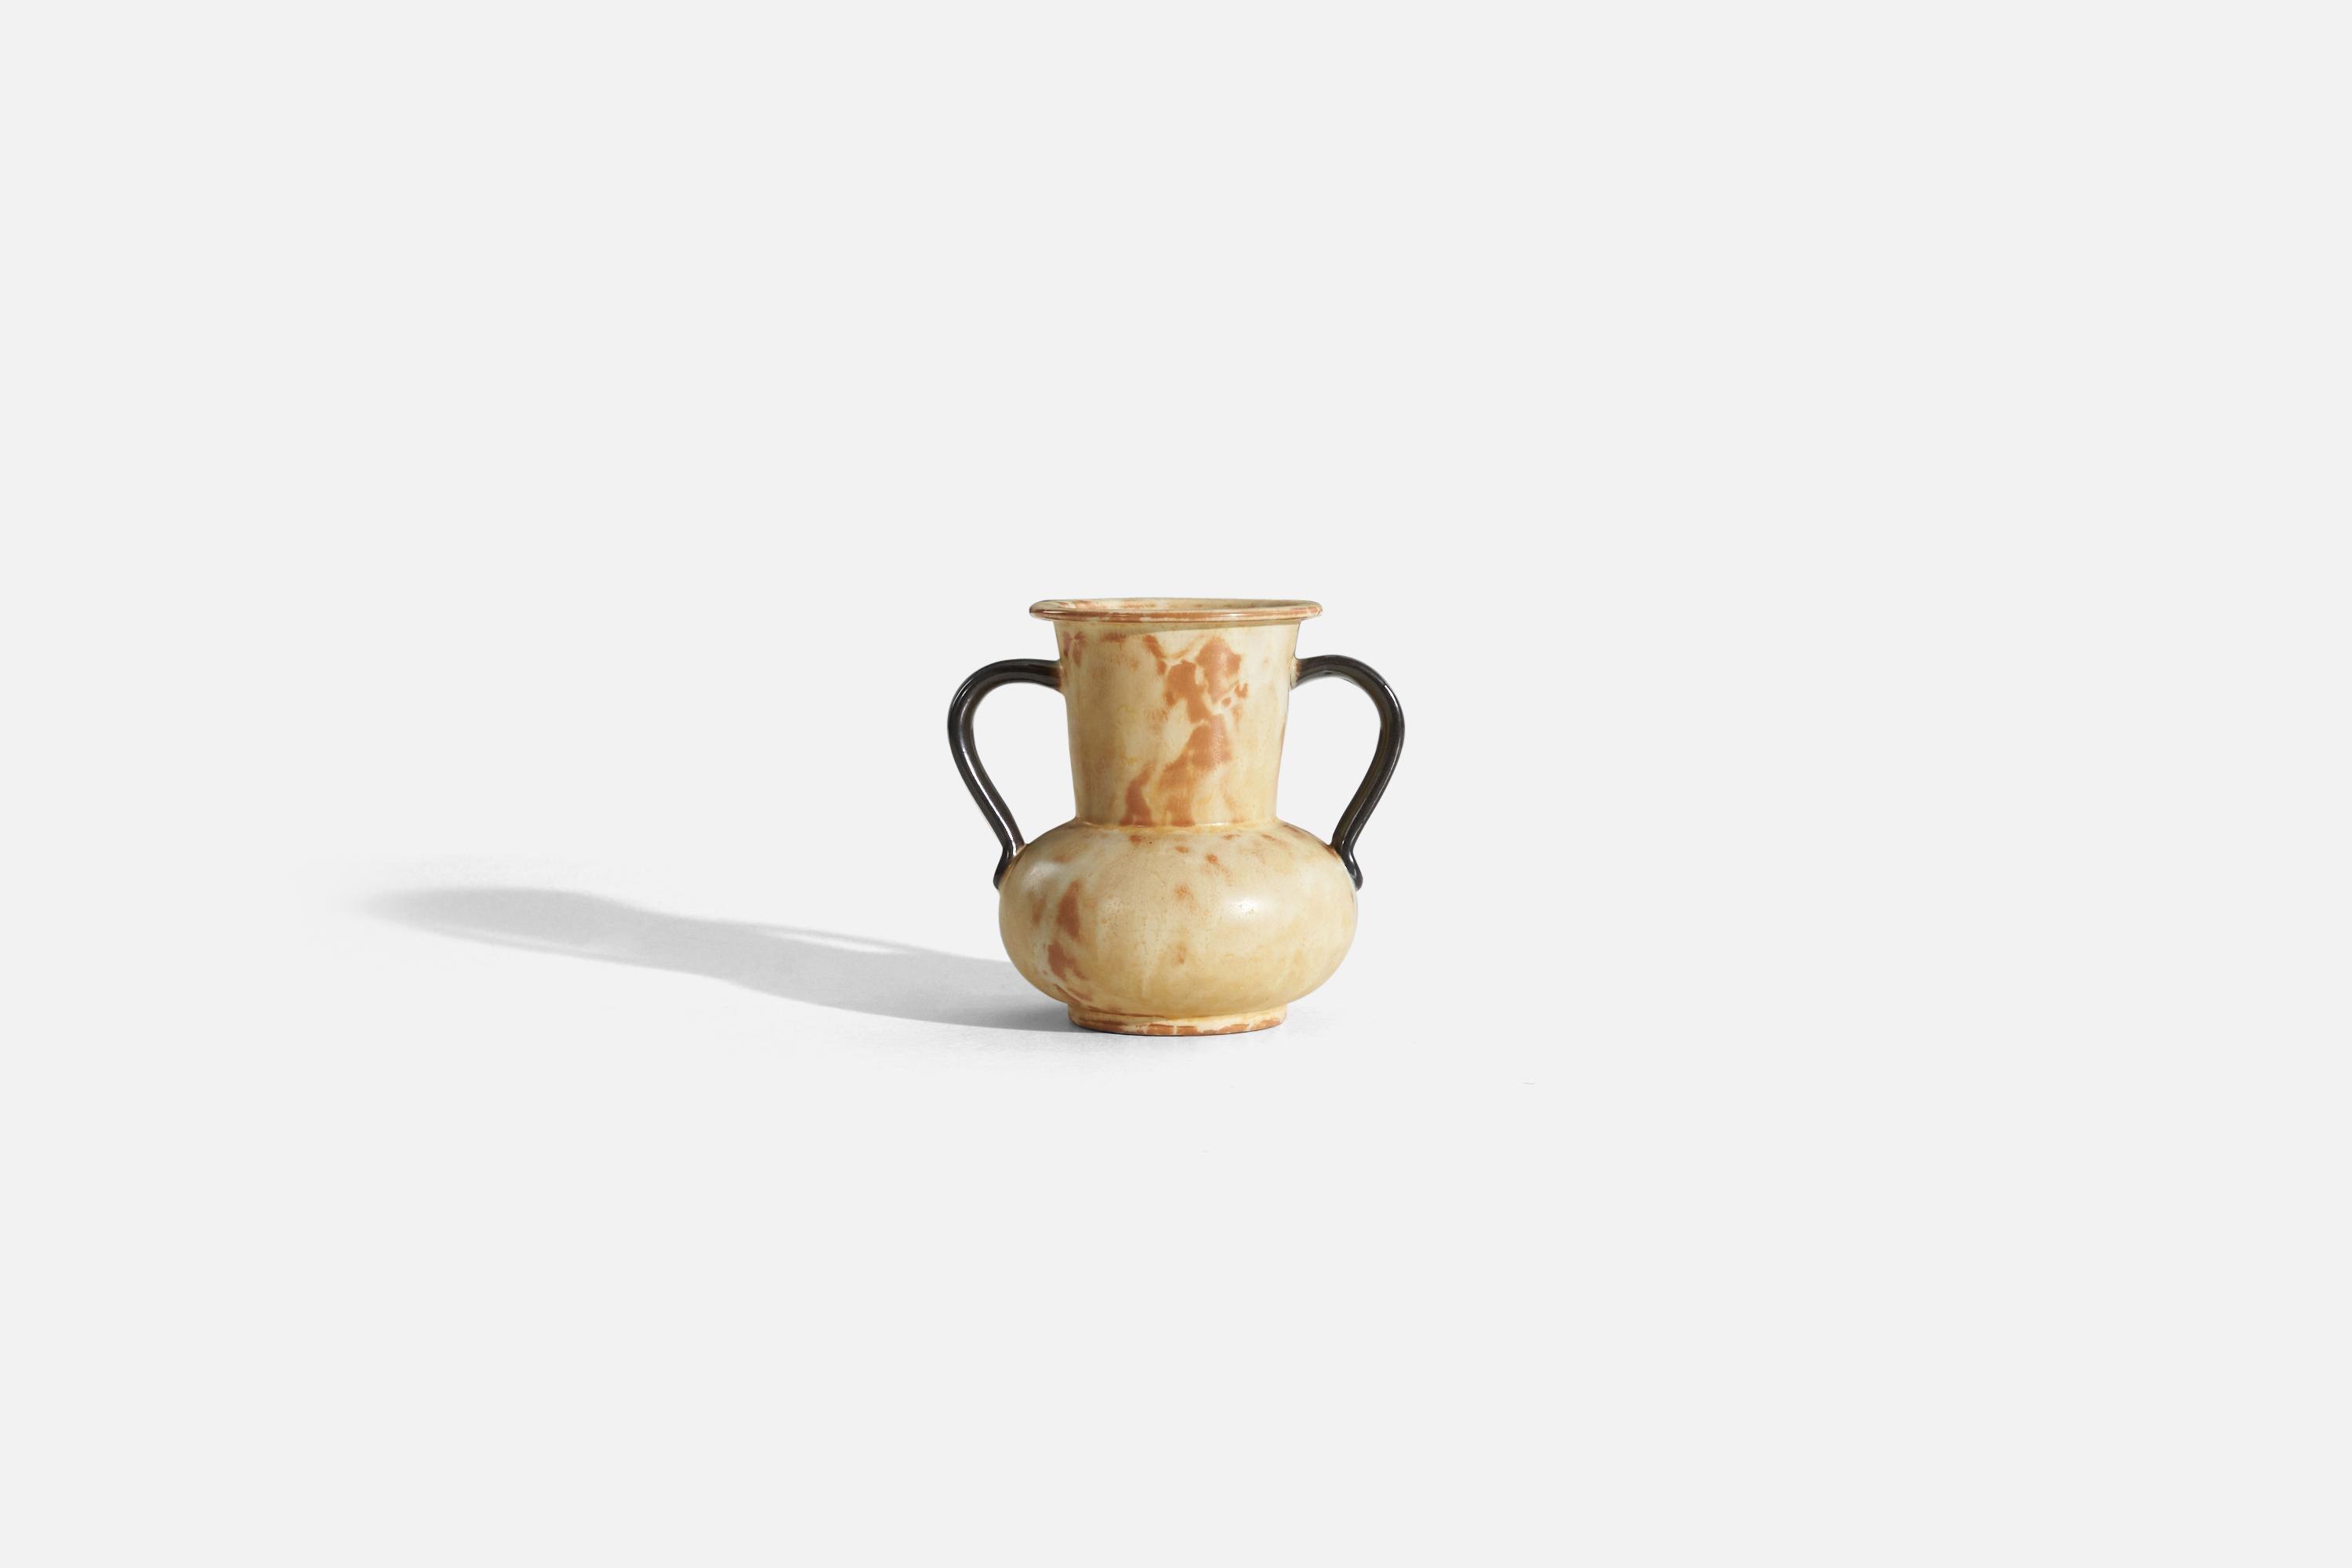 A beige and black, glazed earthenware vase designed and produced by Upsala-Ekeby, Sweden, 1940s.

